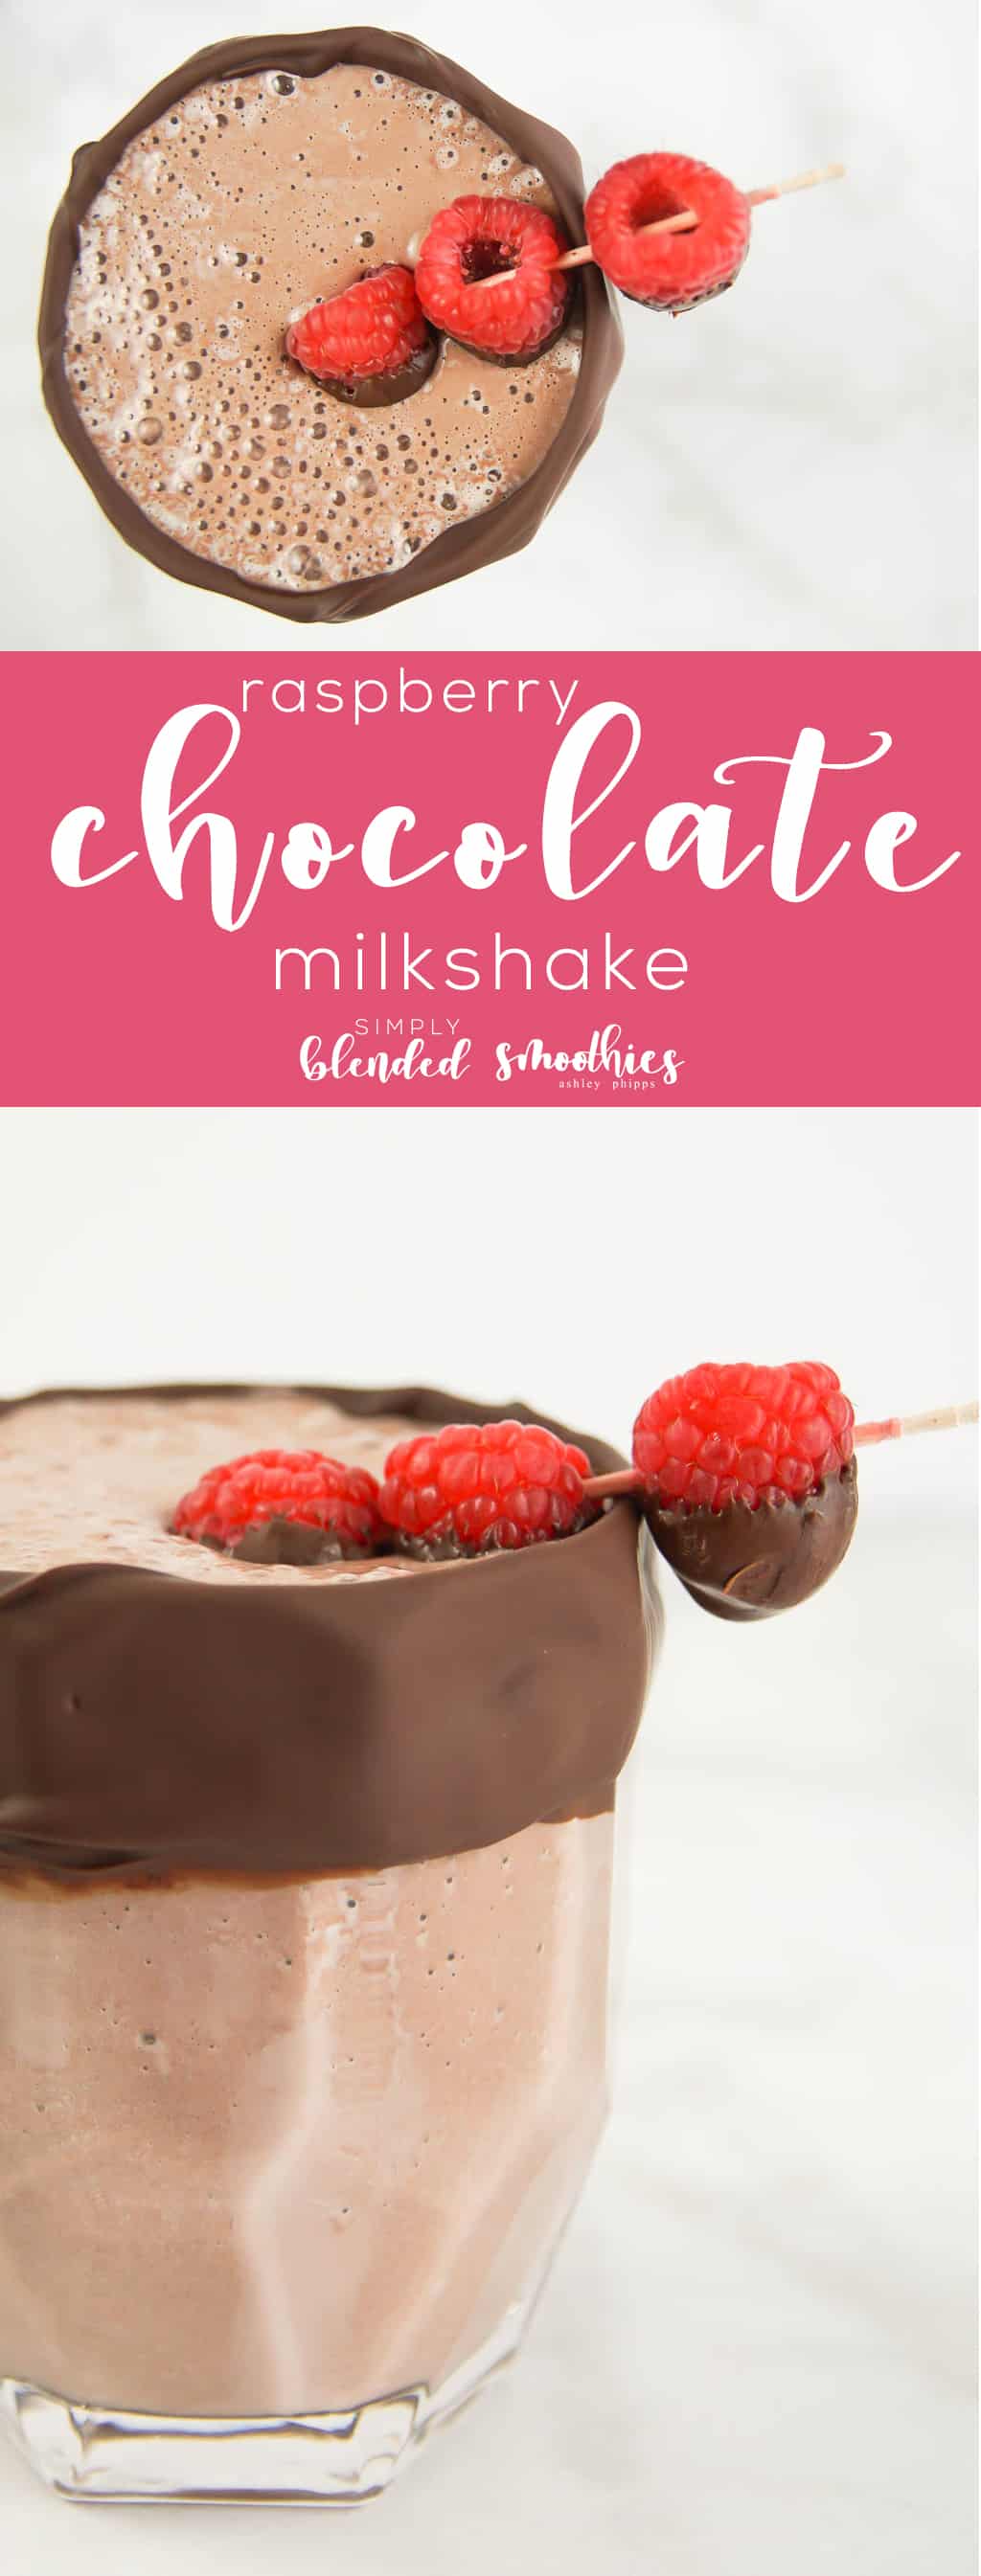 Raspberry Chocolate Milkshake Recipe - So Delicious And Easy To Make - Milkshake - Chocolate Milkshake